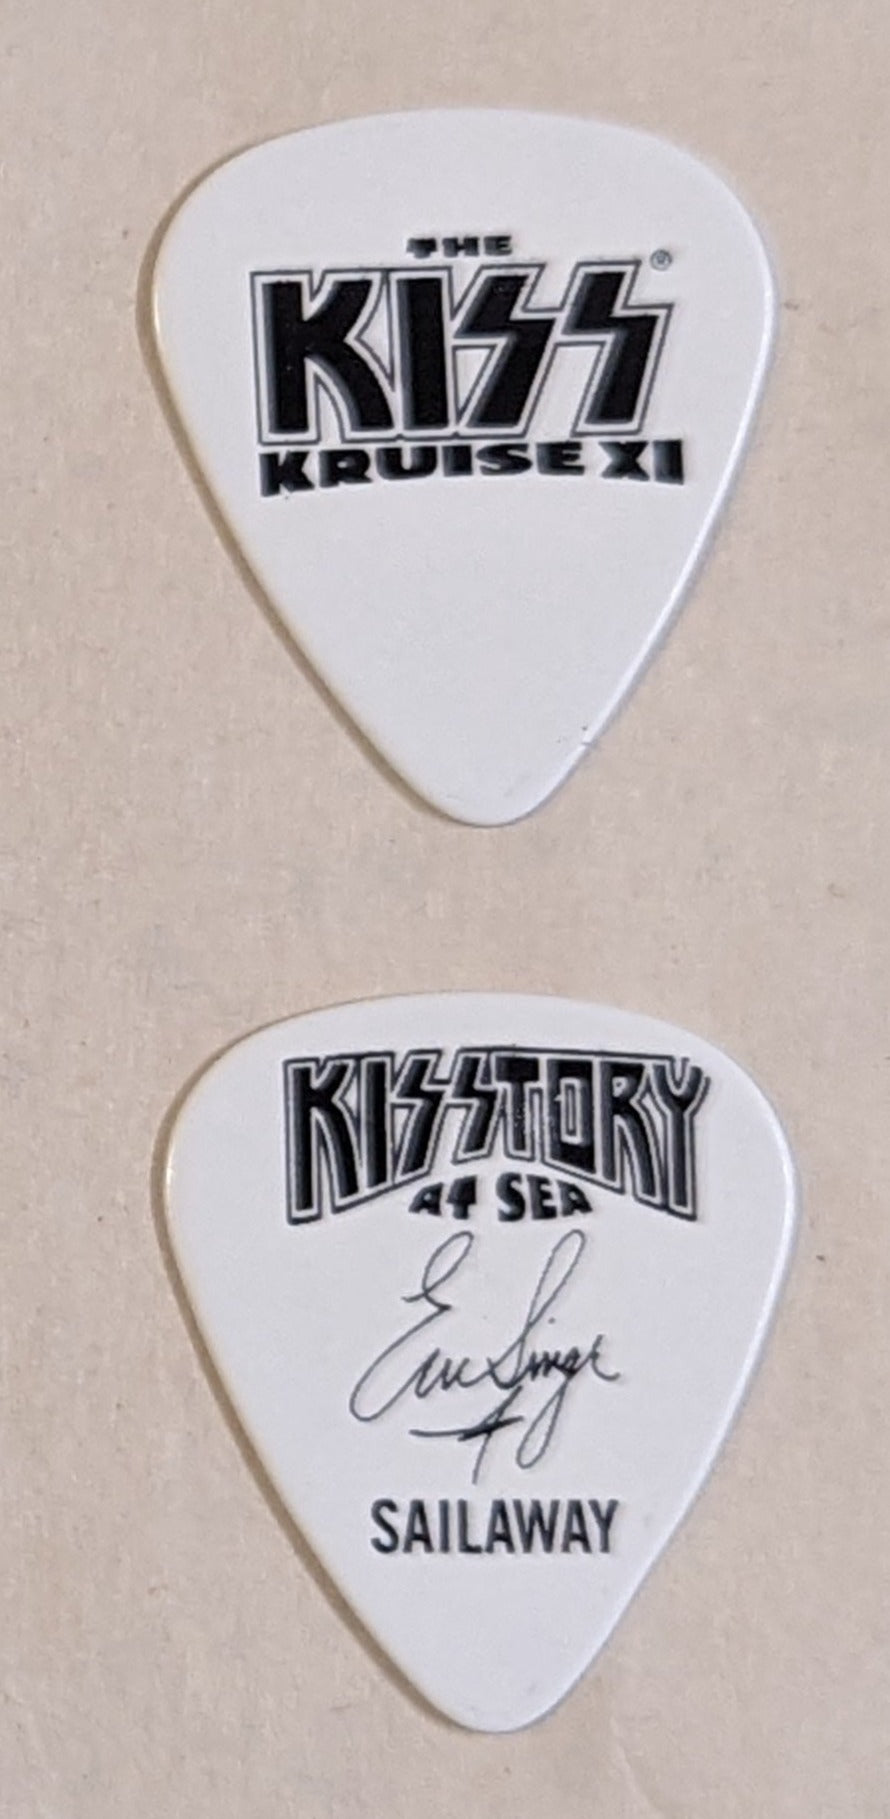 KISS Kruise XI Sailaway Guitar Picks